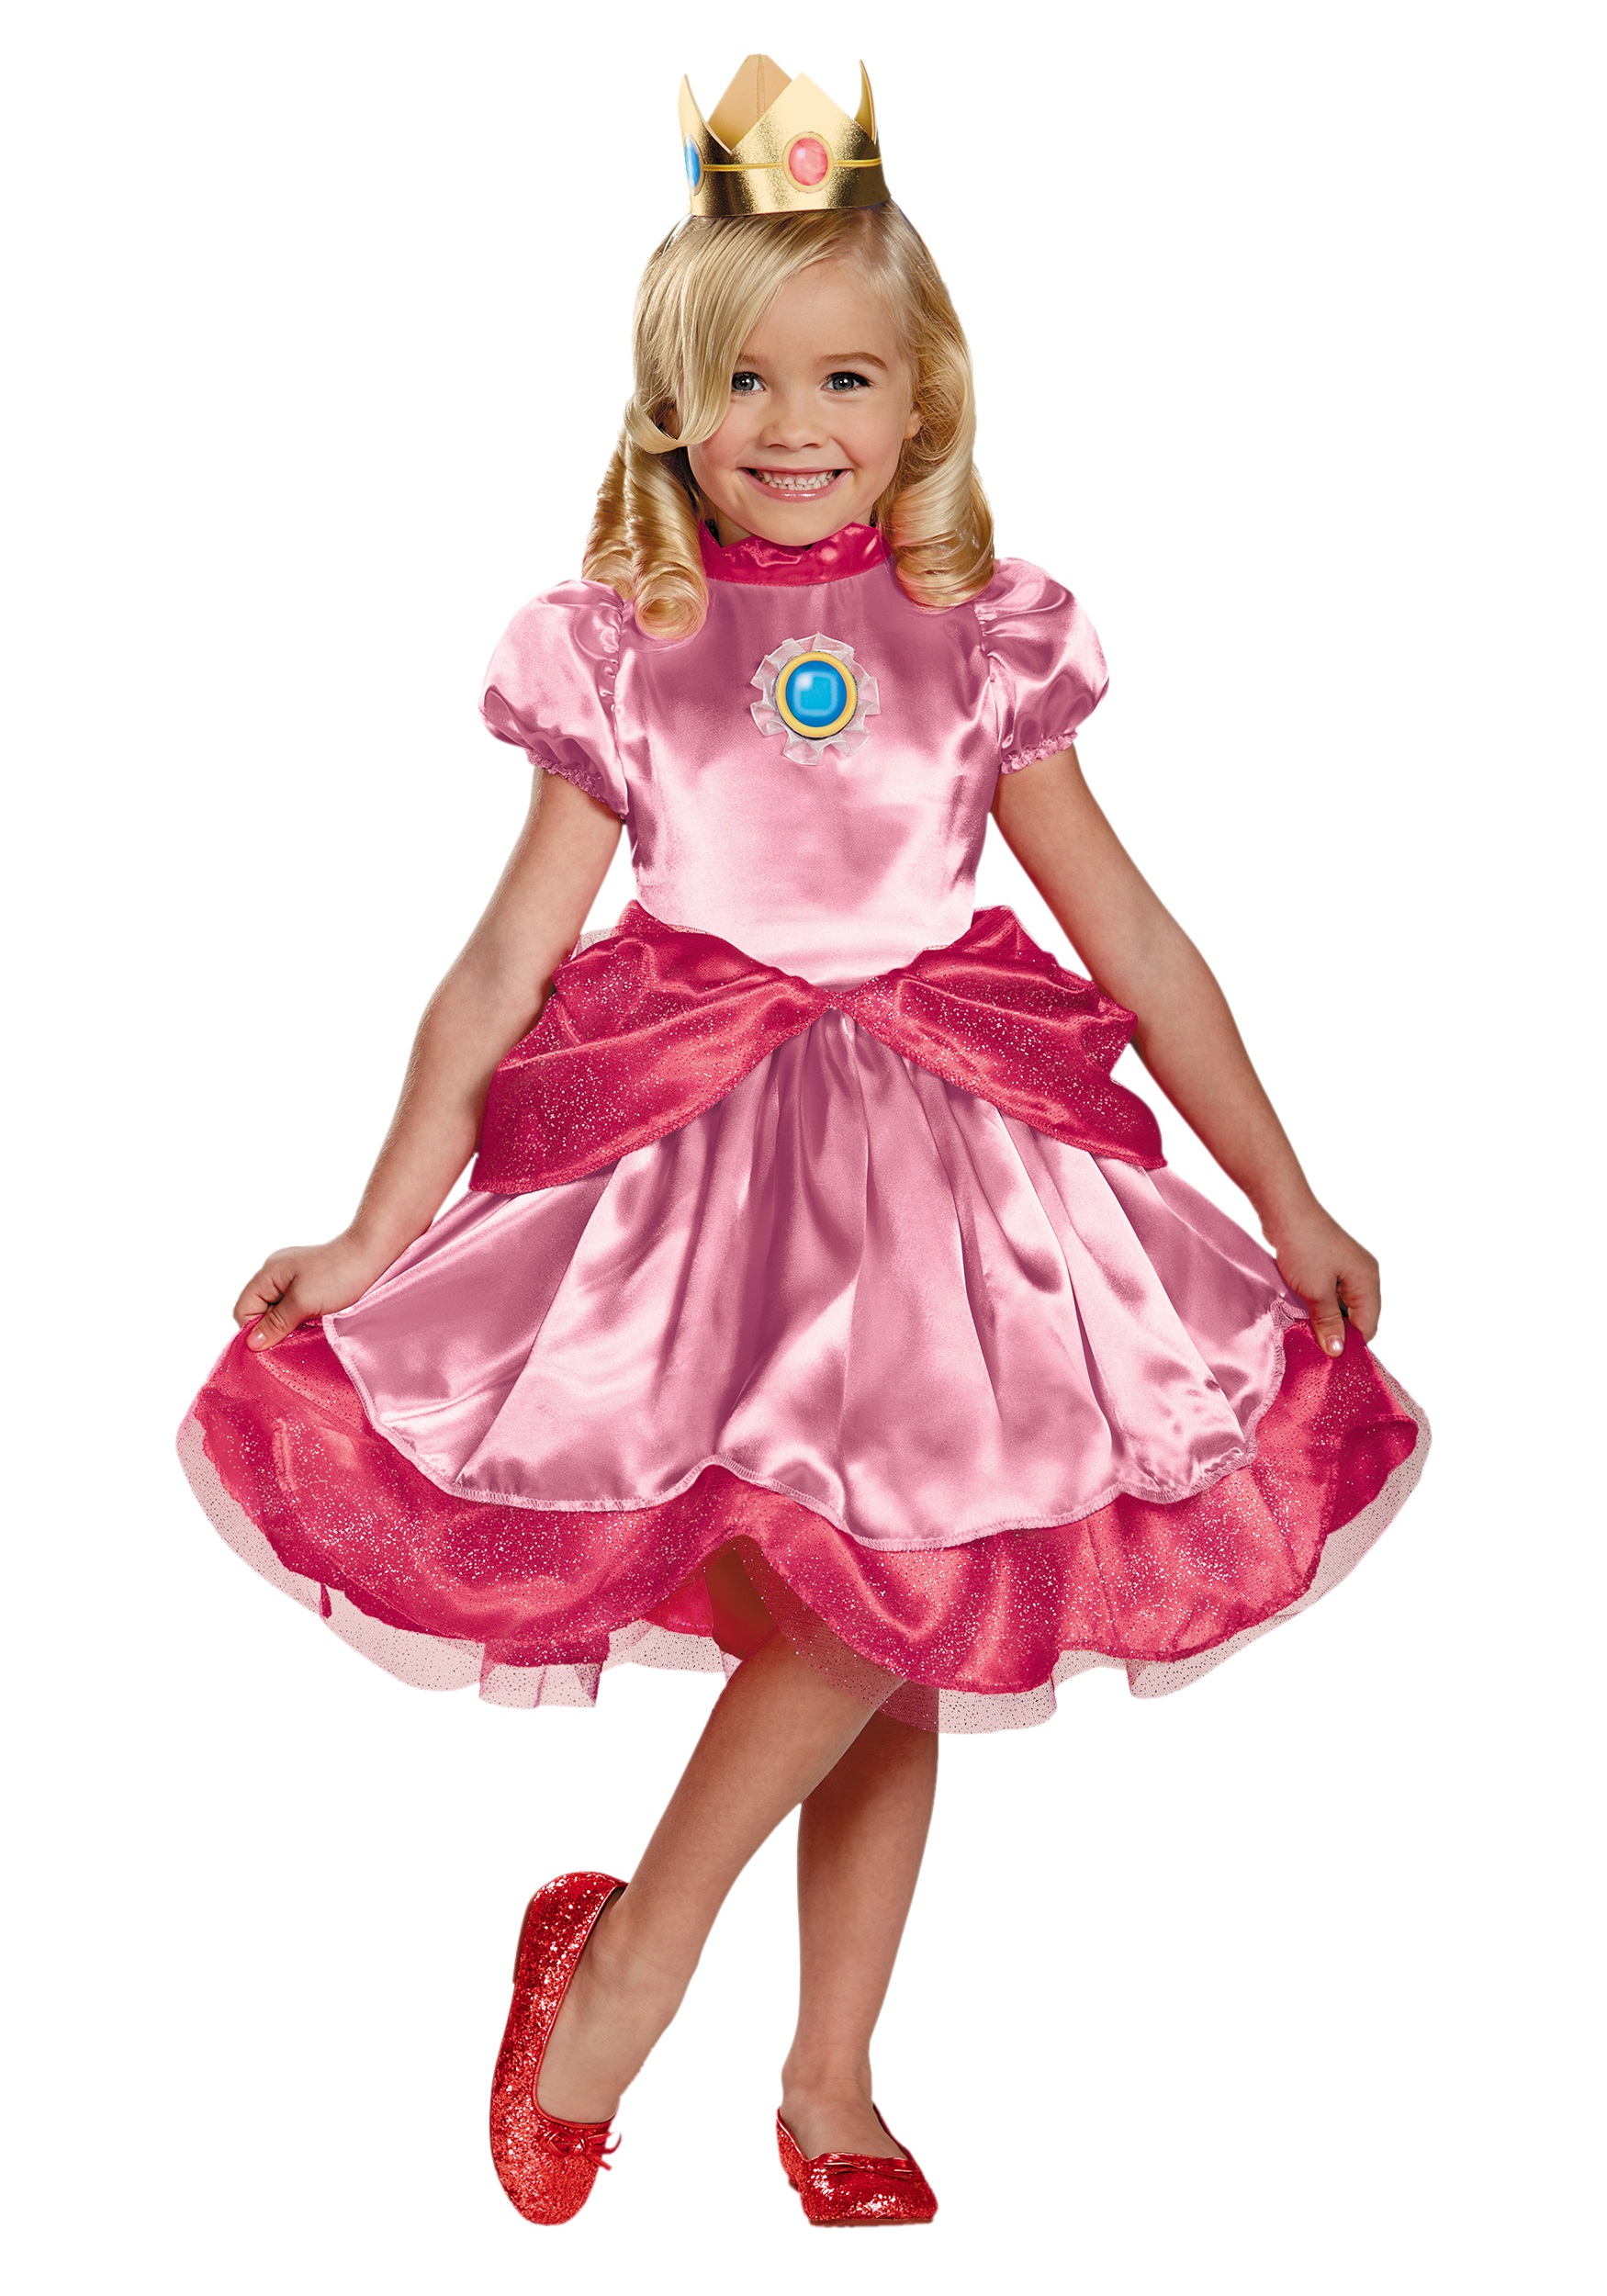 Photos - Fancy Dress Toddler Disguise  Princess Peach Costume Pink/Blue DI73686 